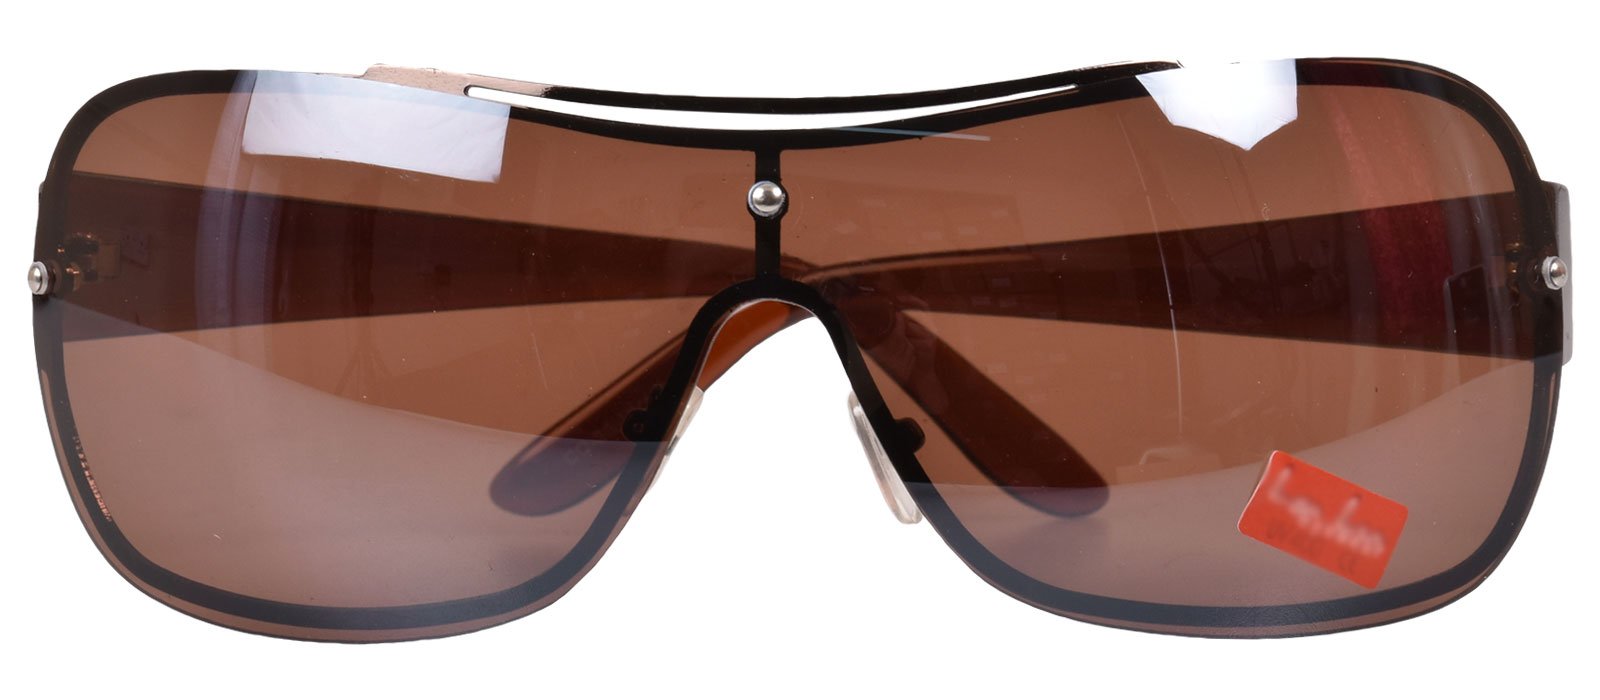 Sunglasses CQ38 Brown